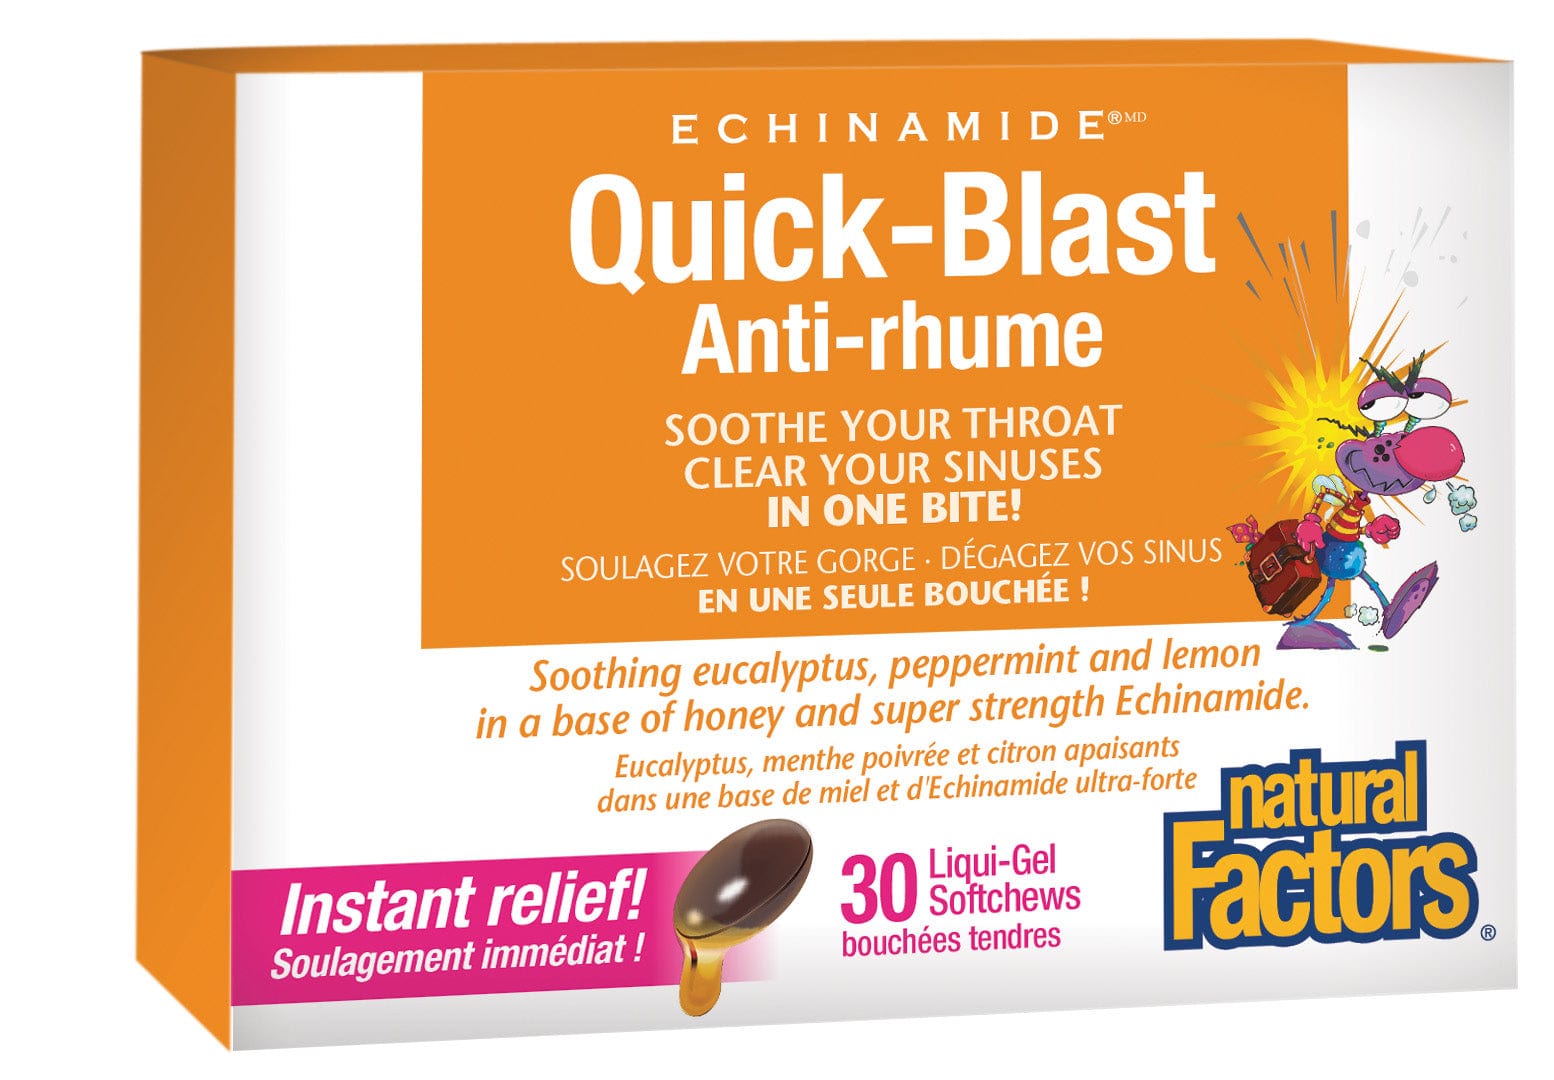 NATURAL FACTORS Suppléments Quick-blast (anti-rhume) 30gel